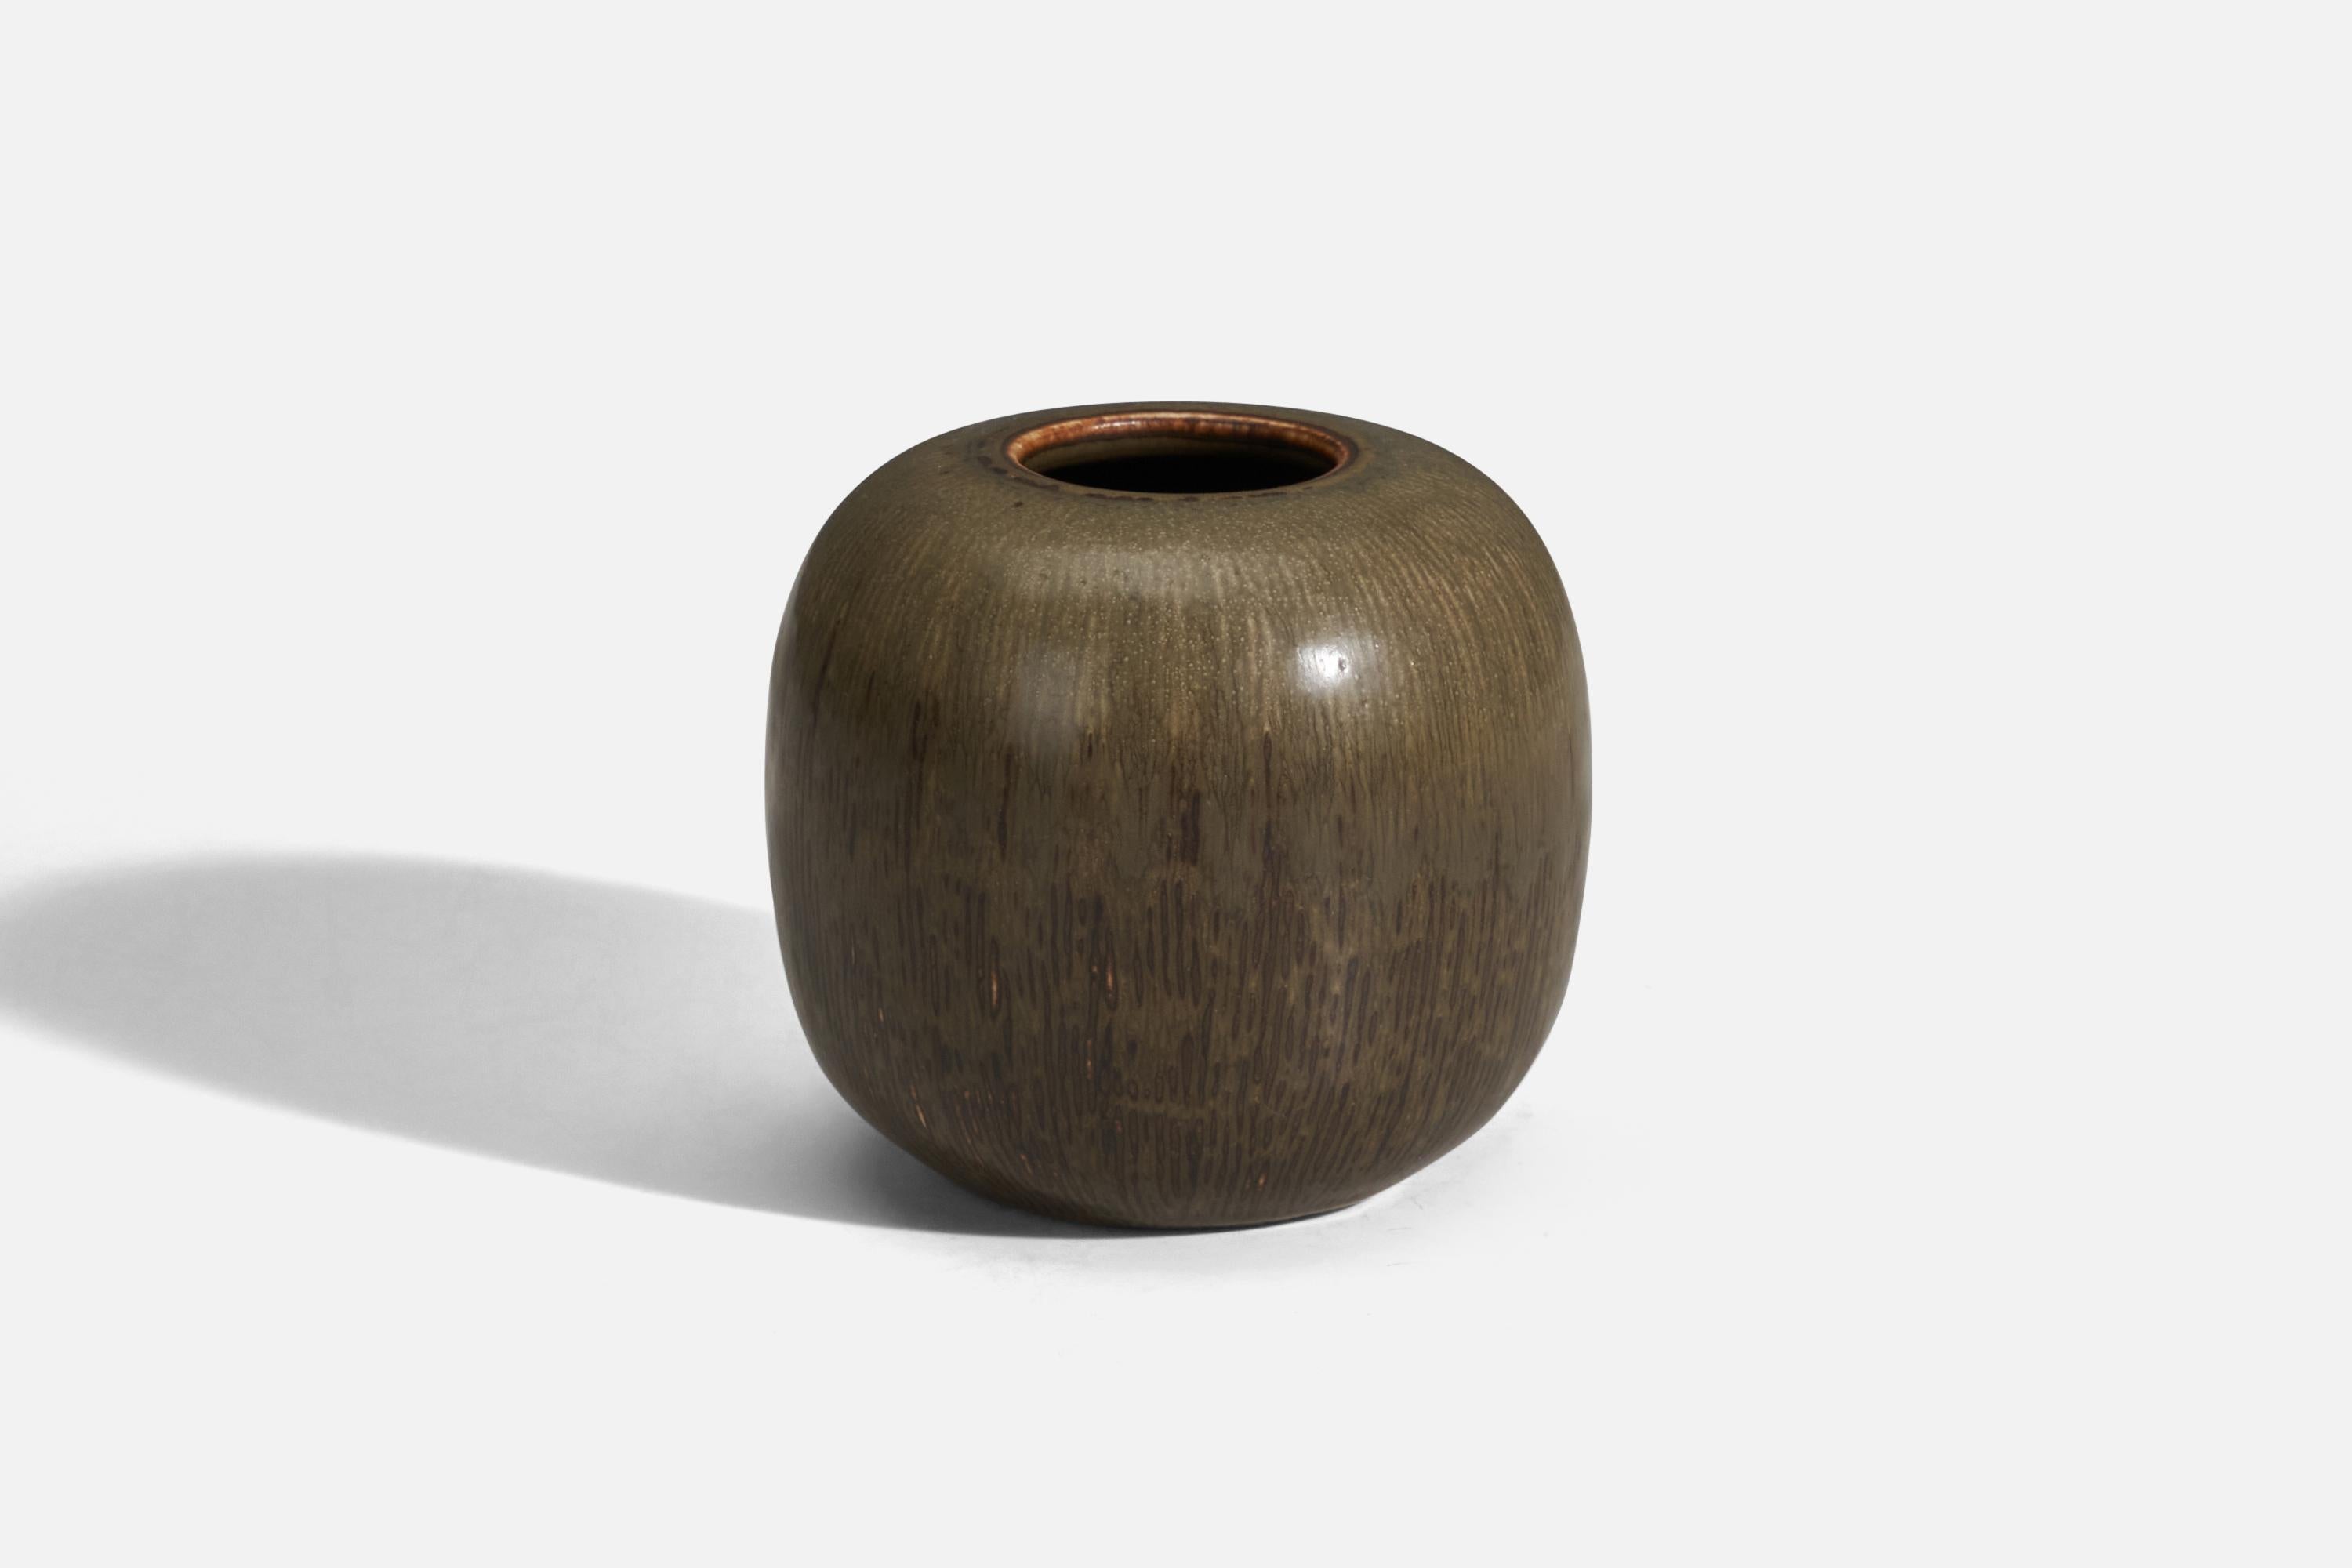 A brown glazed stoneware vase designed by Valdemar Petersen and produced by Bing & Grøndahl, Denmark, 1950s.